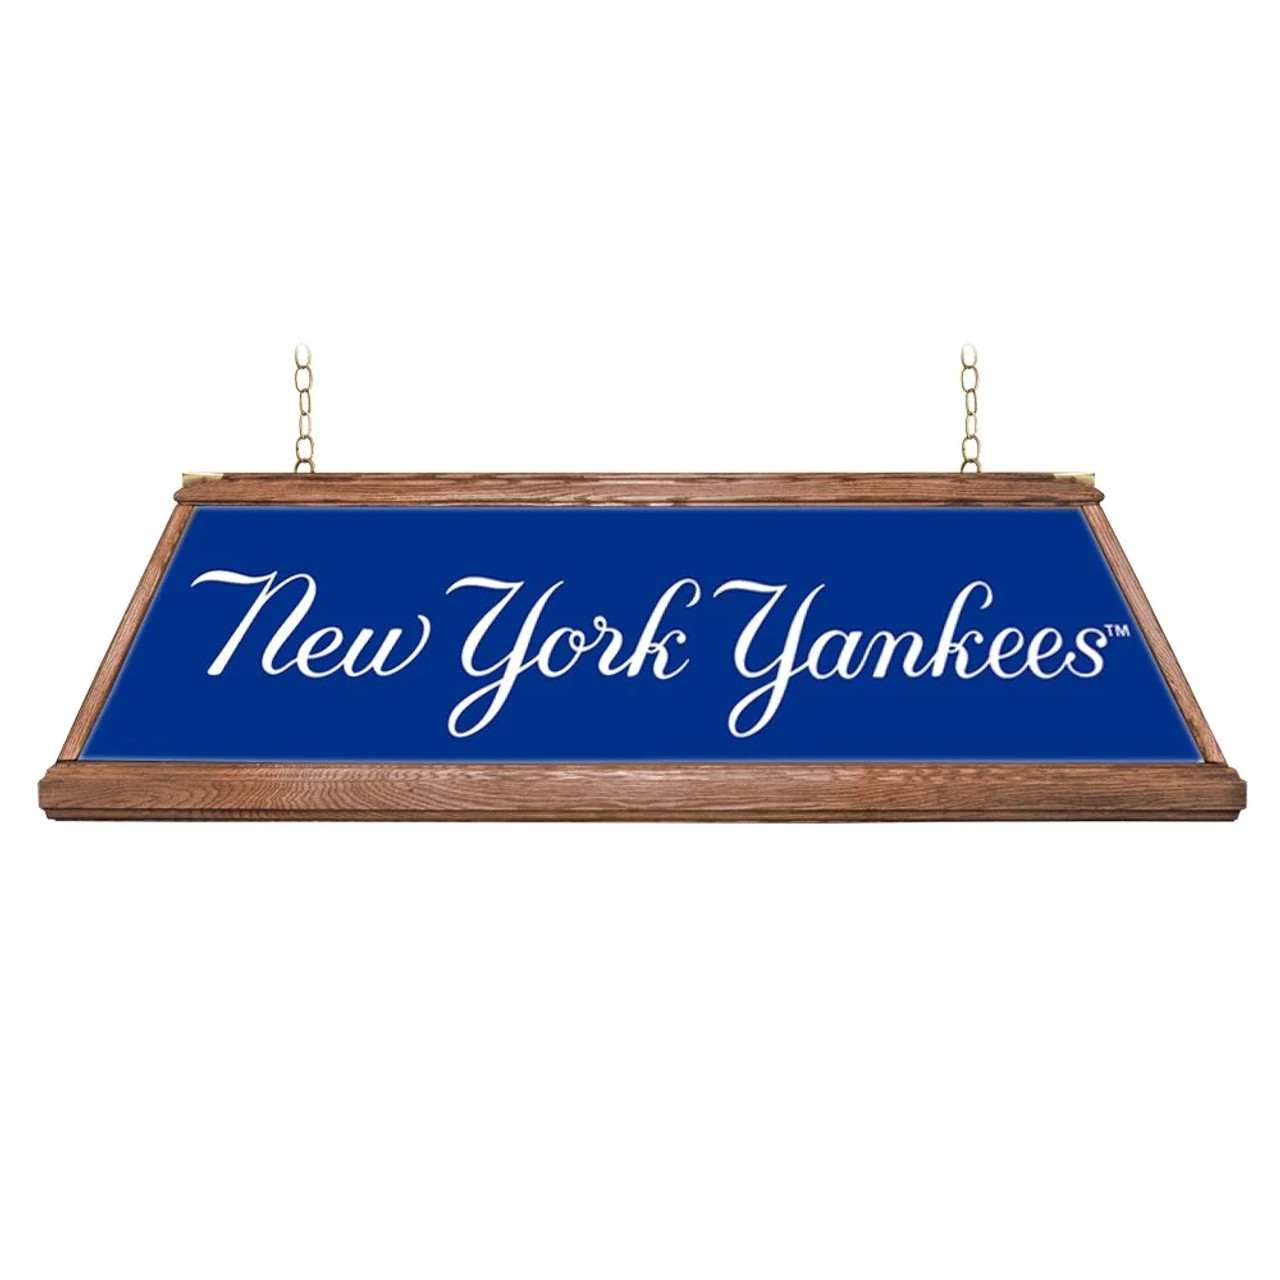 New York Yankees: Premium Wood Pool Table Light "A" Version